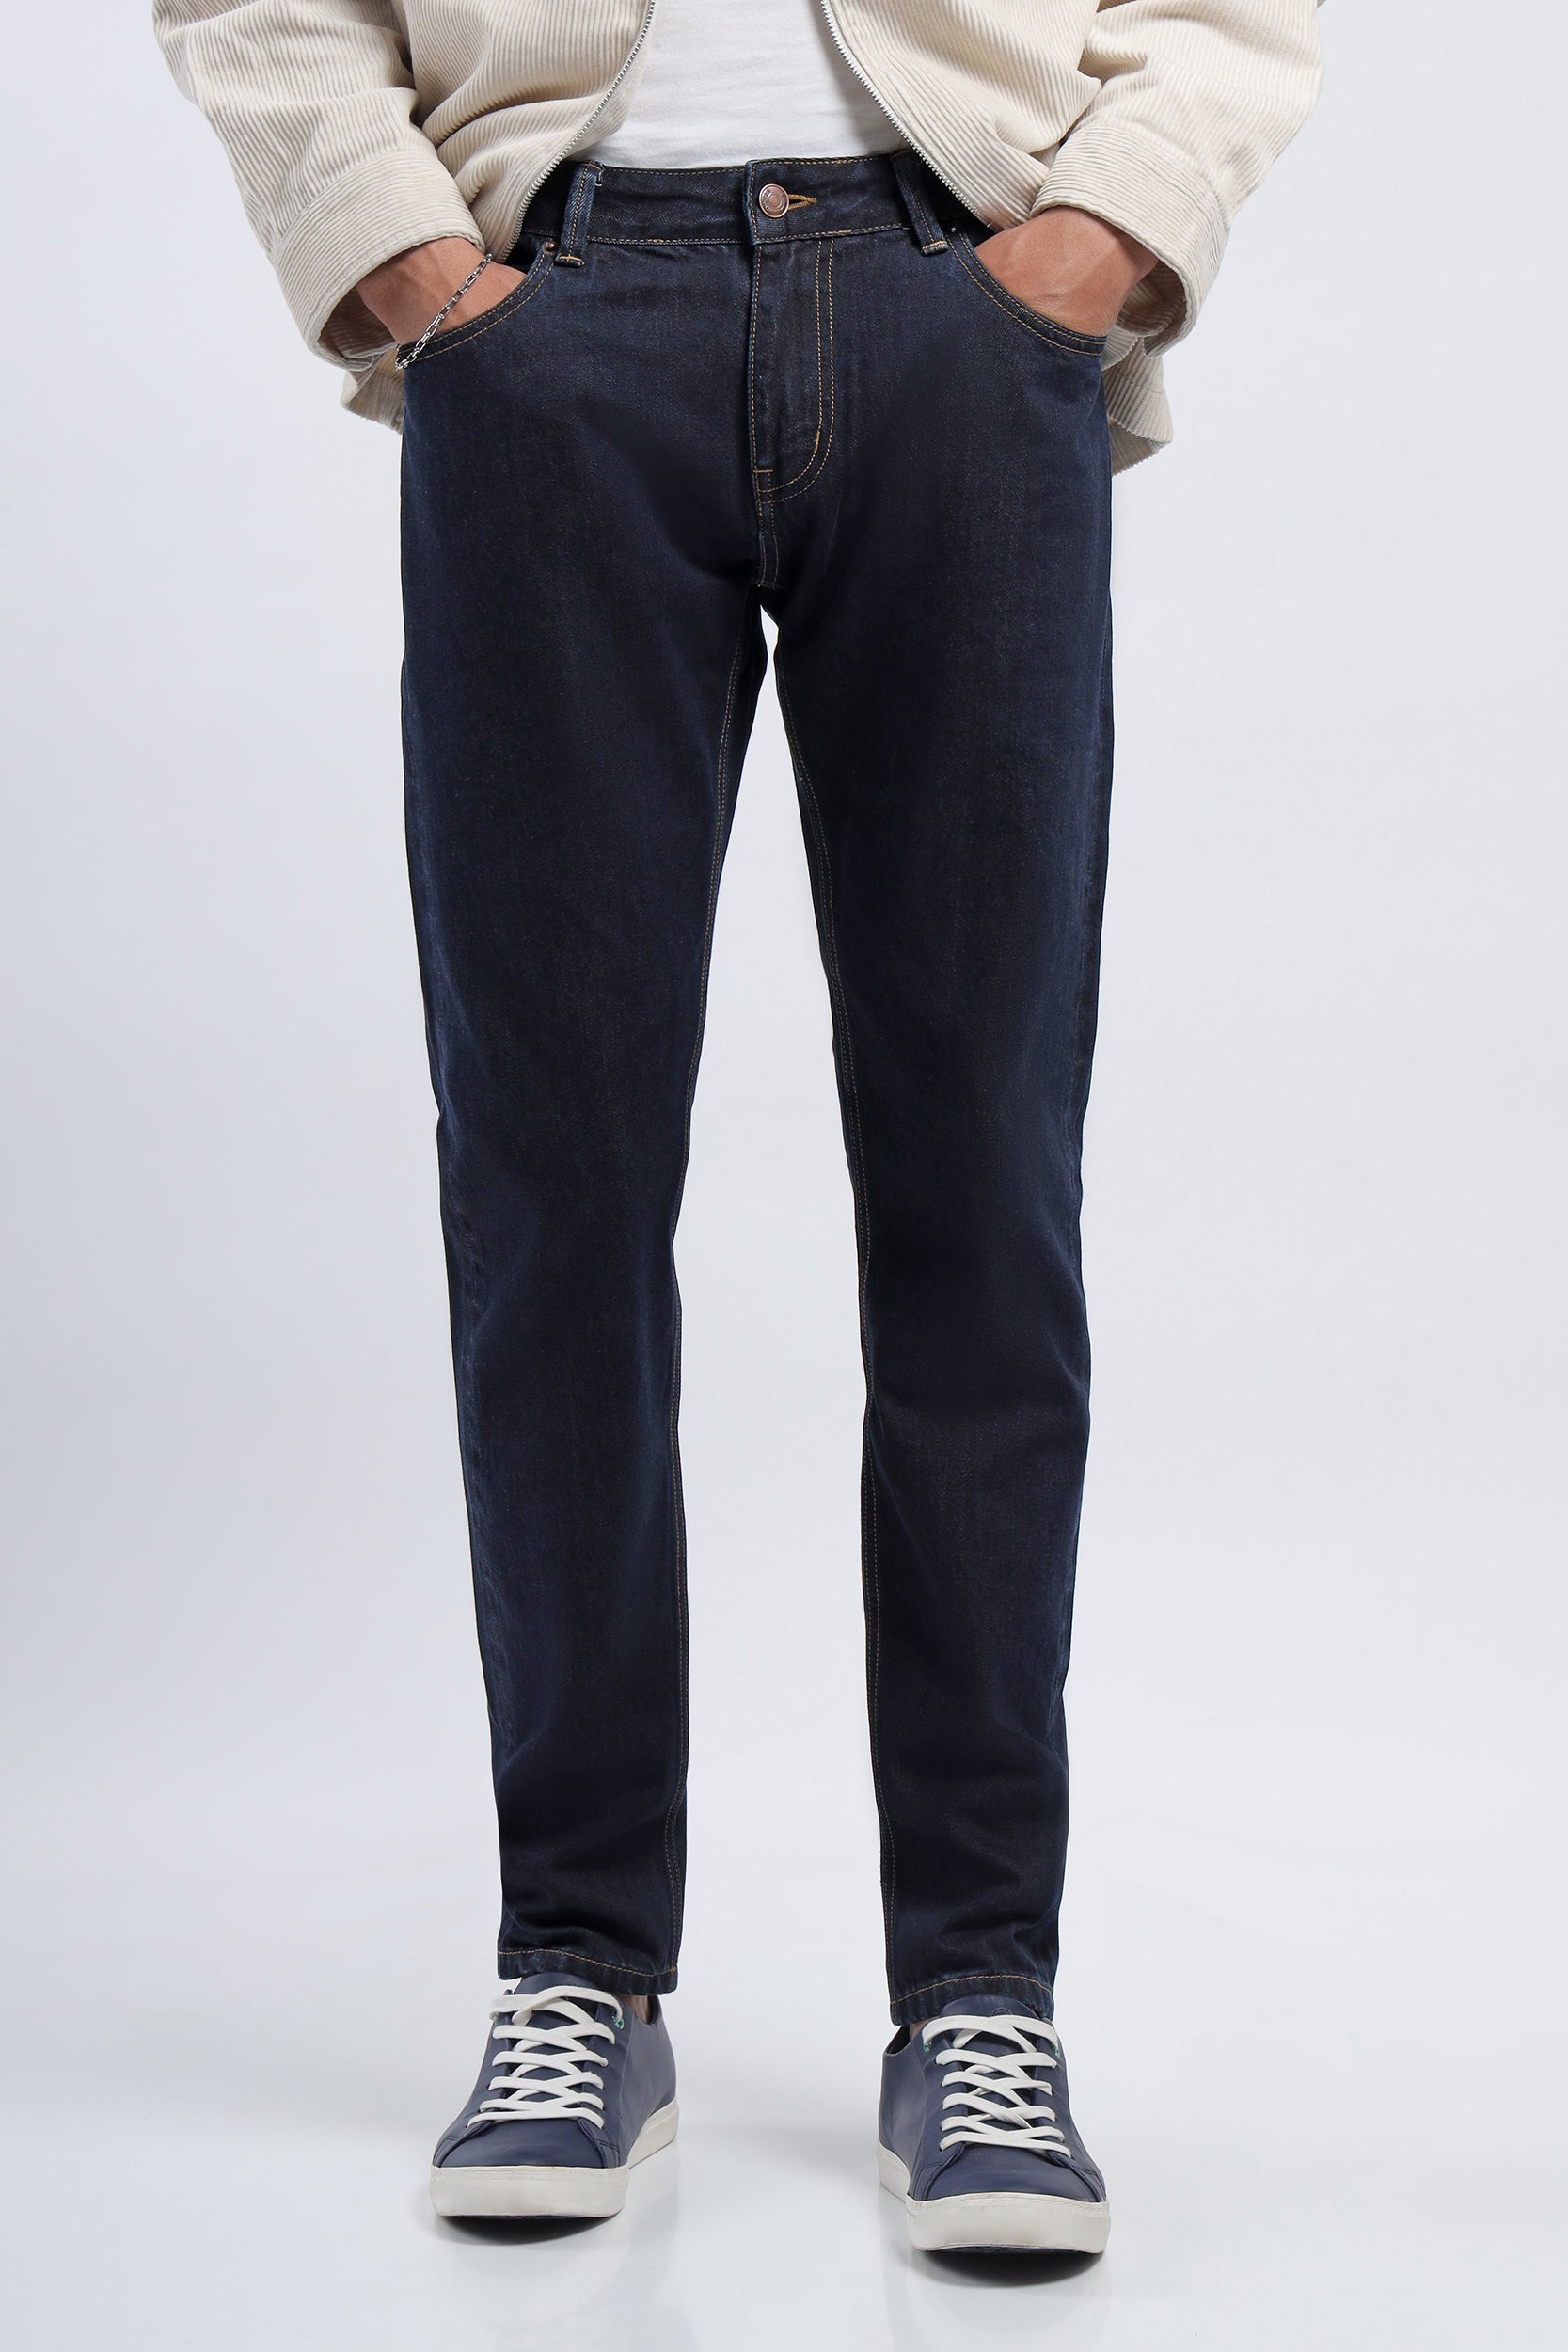 Mathis Macadam ustabil GD007 Dark Blue Selvedge Jeans Slim Fit Men Jeans – Noggah Denims